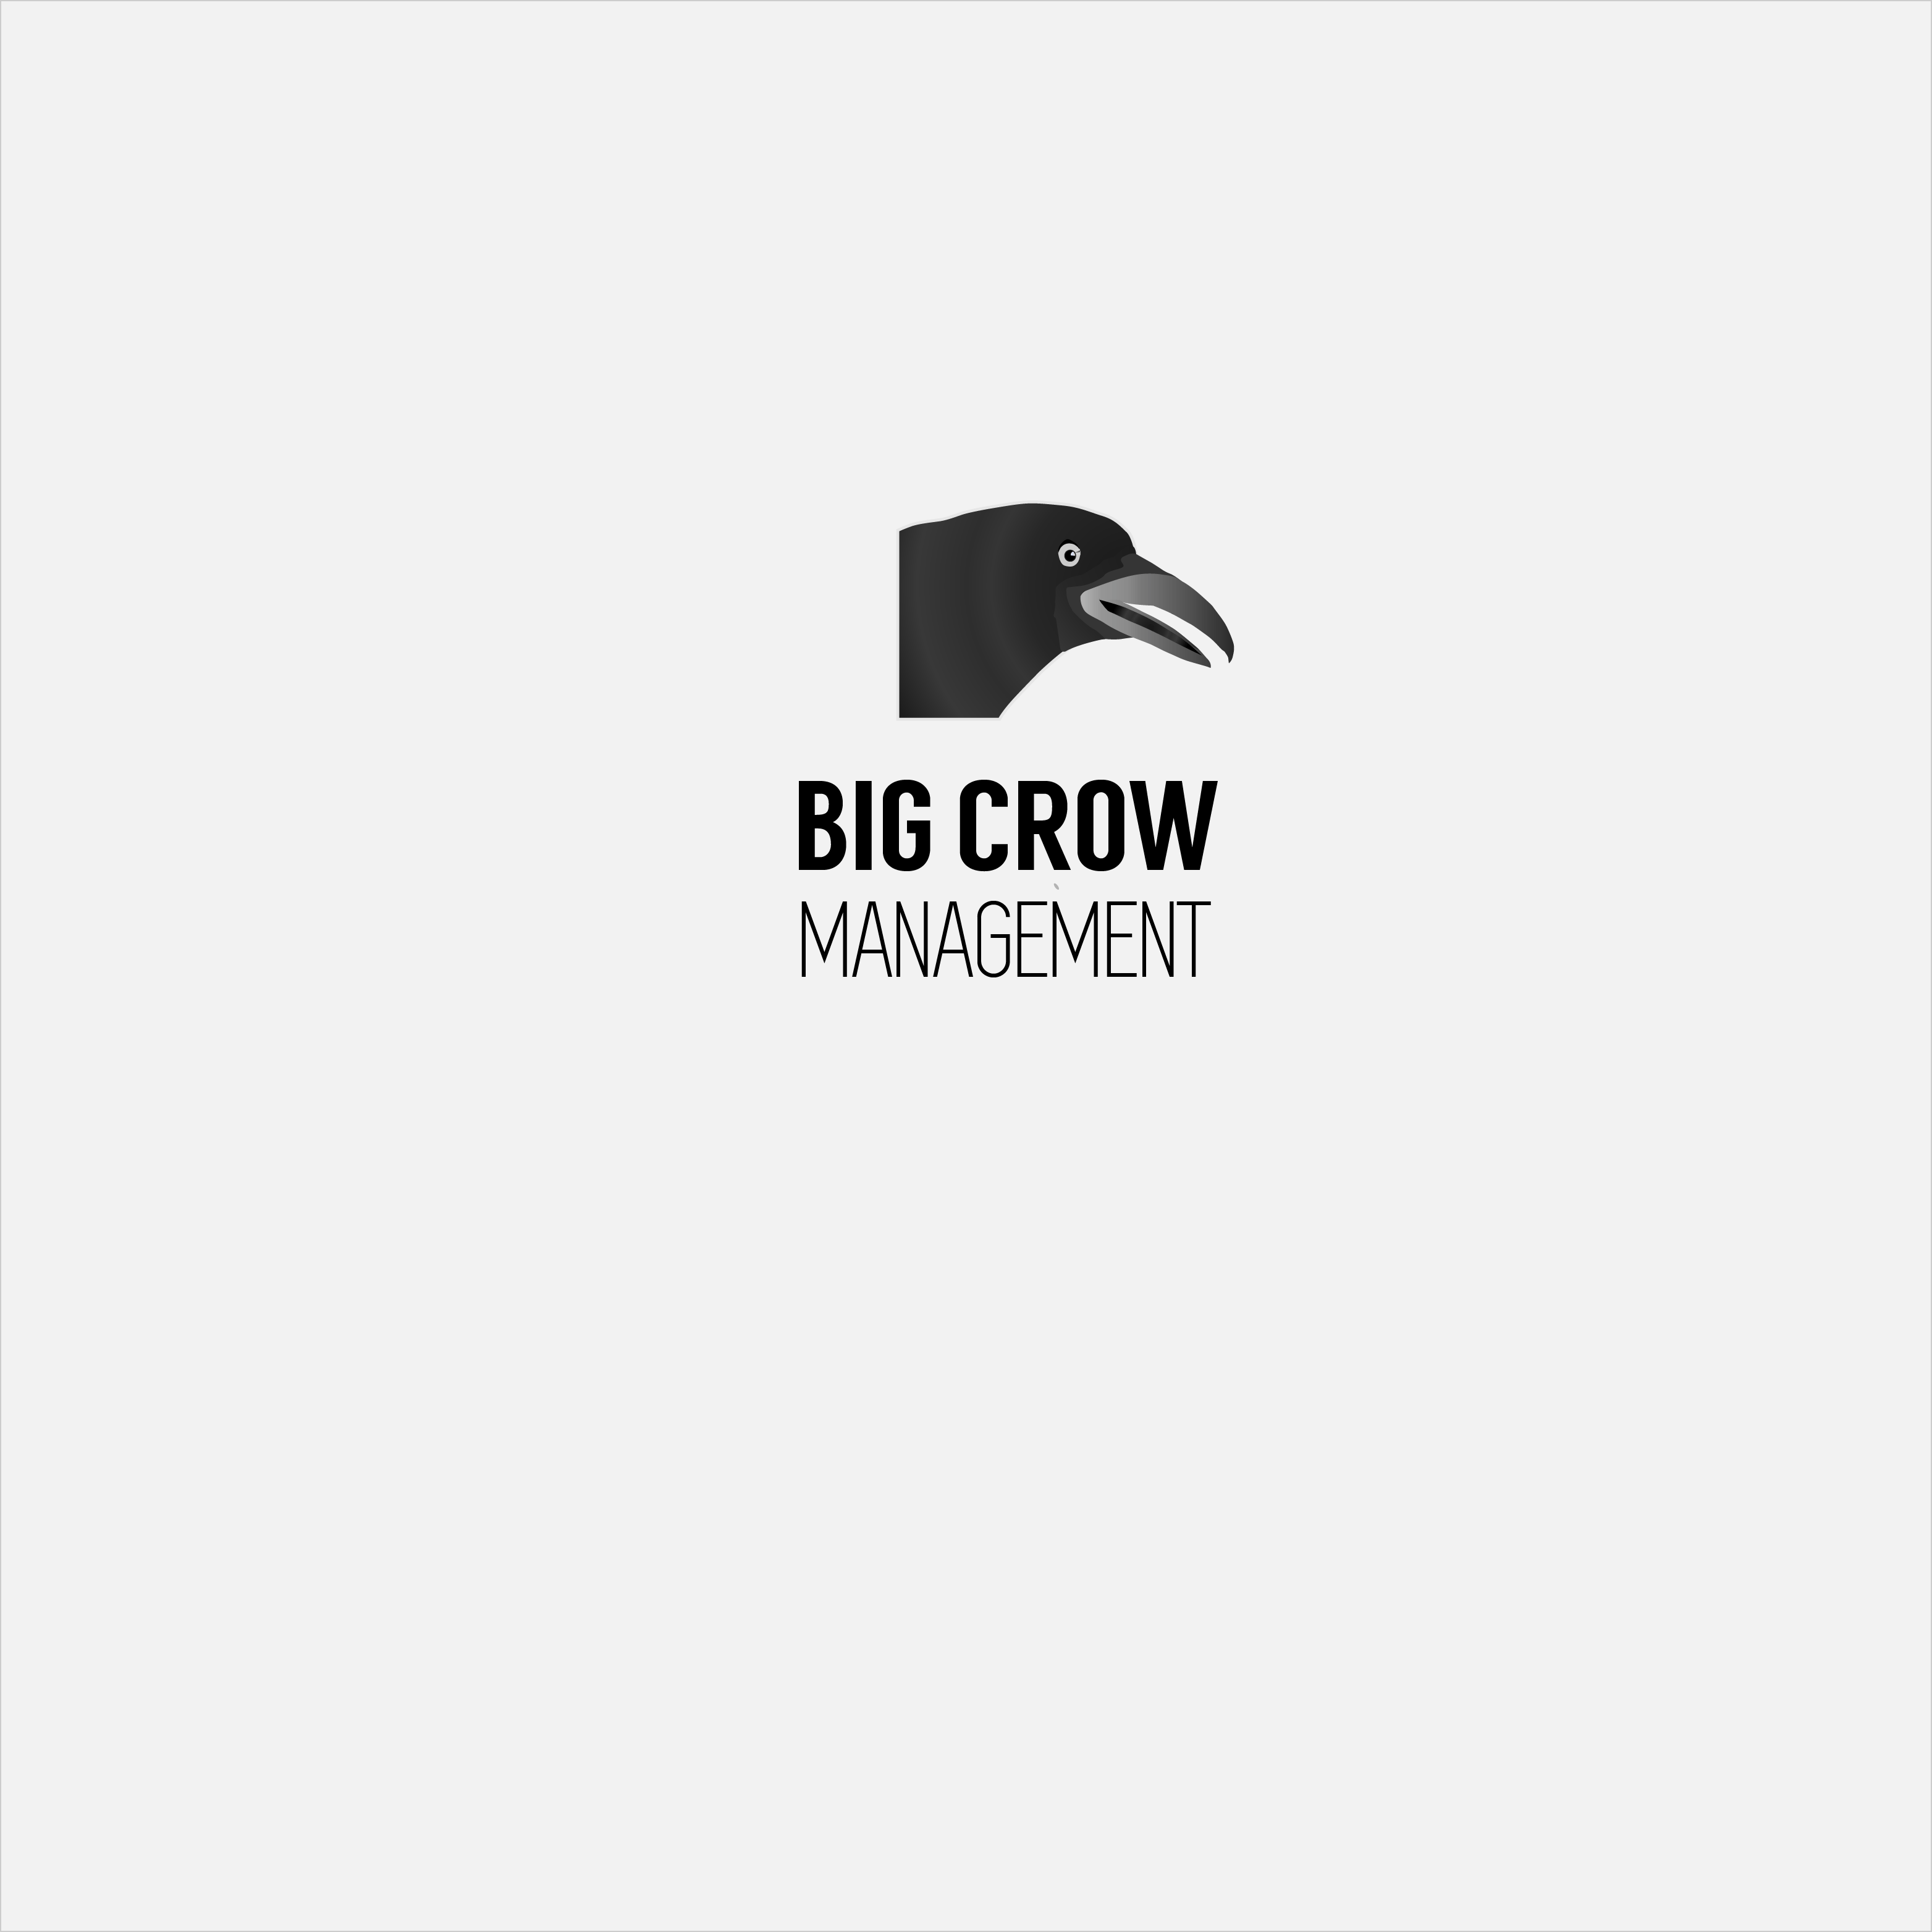 American Crow Logo - Logo Design. 'Big Crow Management' design project